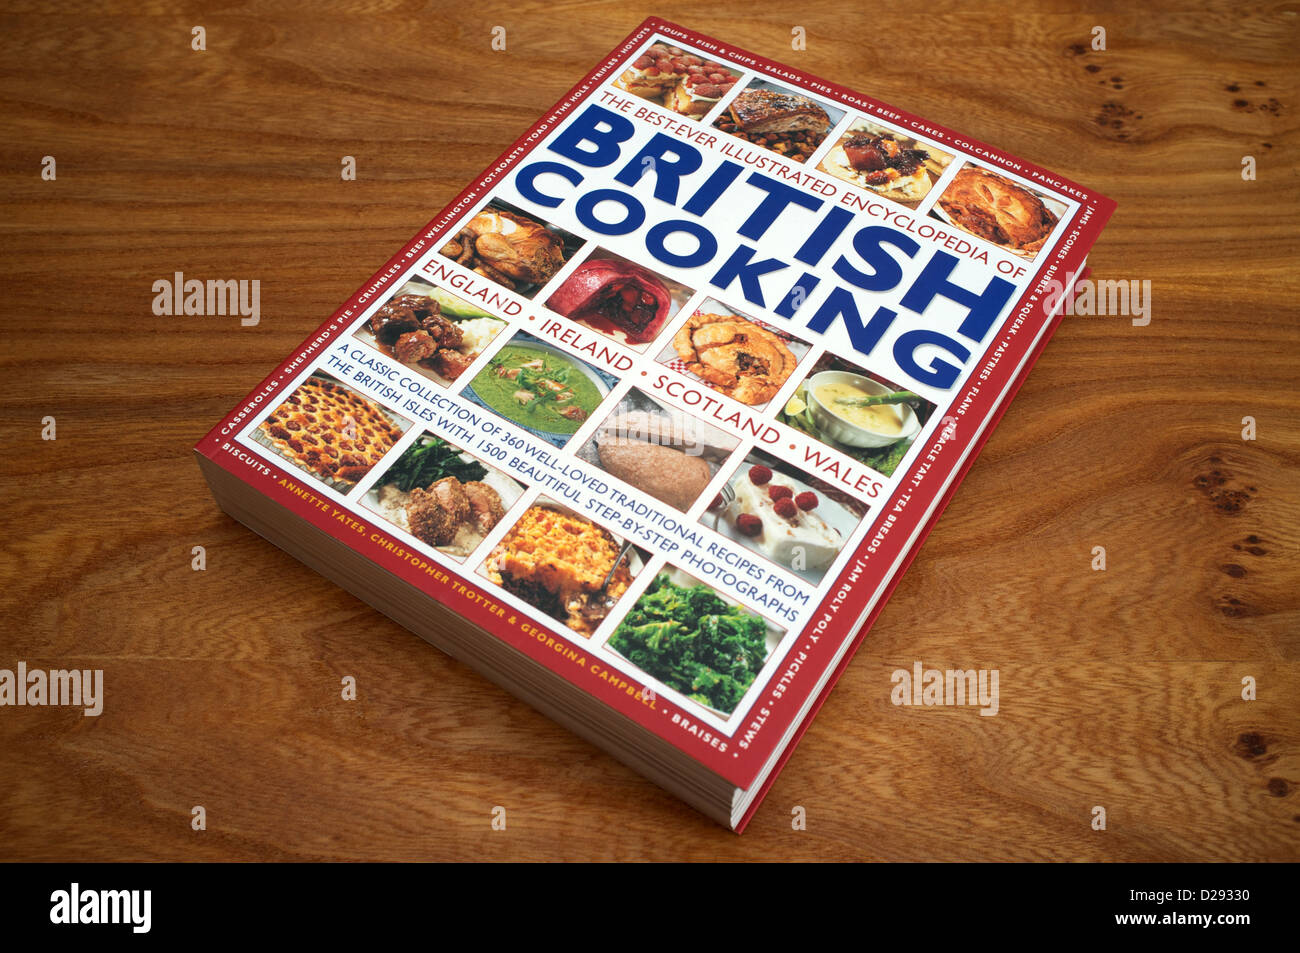 British cooking encyclopedia Stock Photo